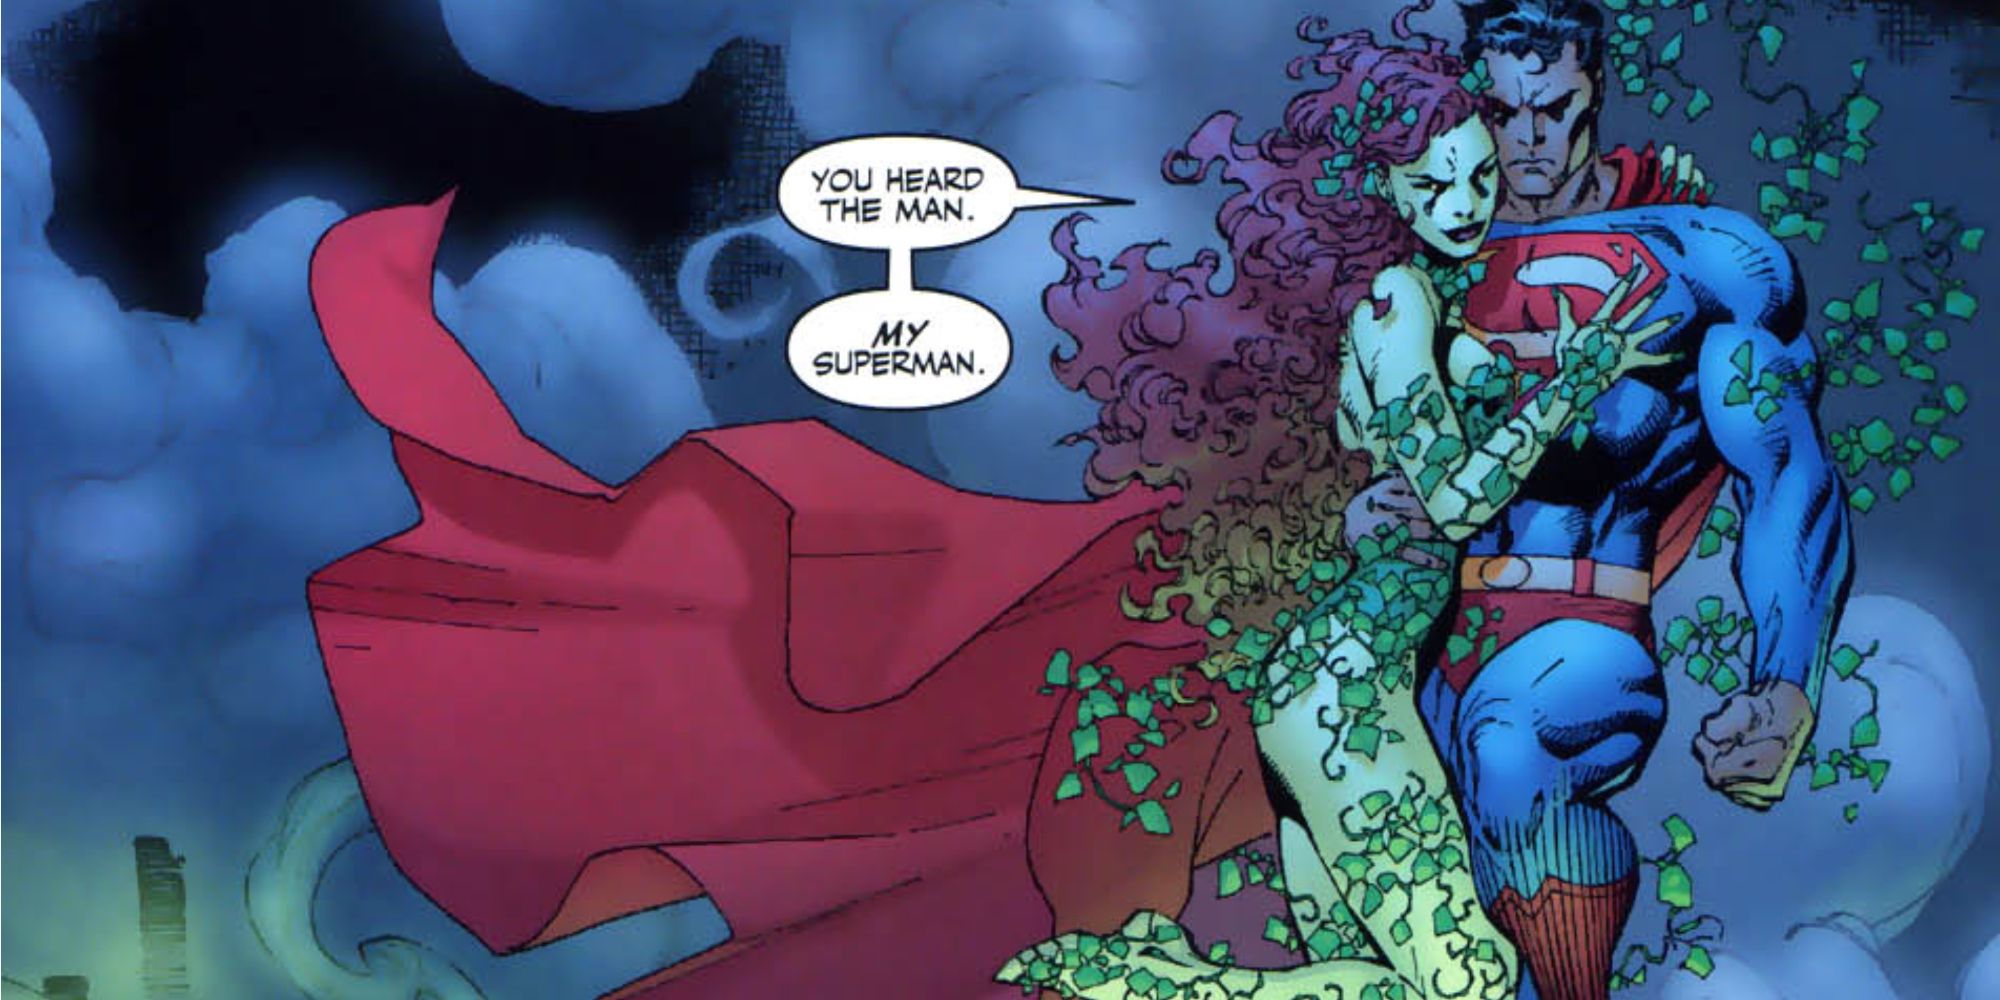 Poison Ivy possesses Superman in Hush comics.